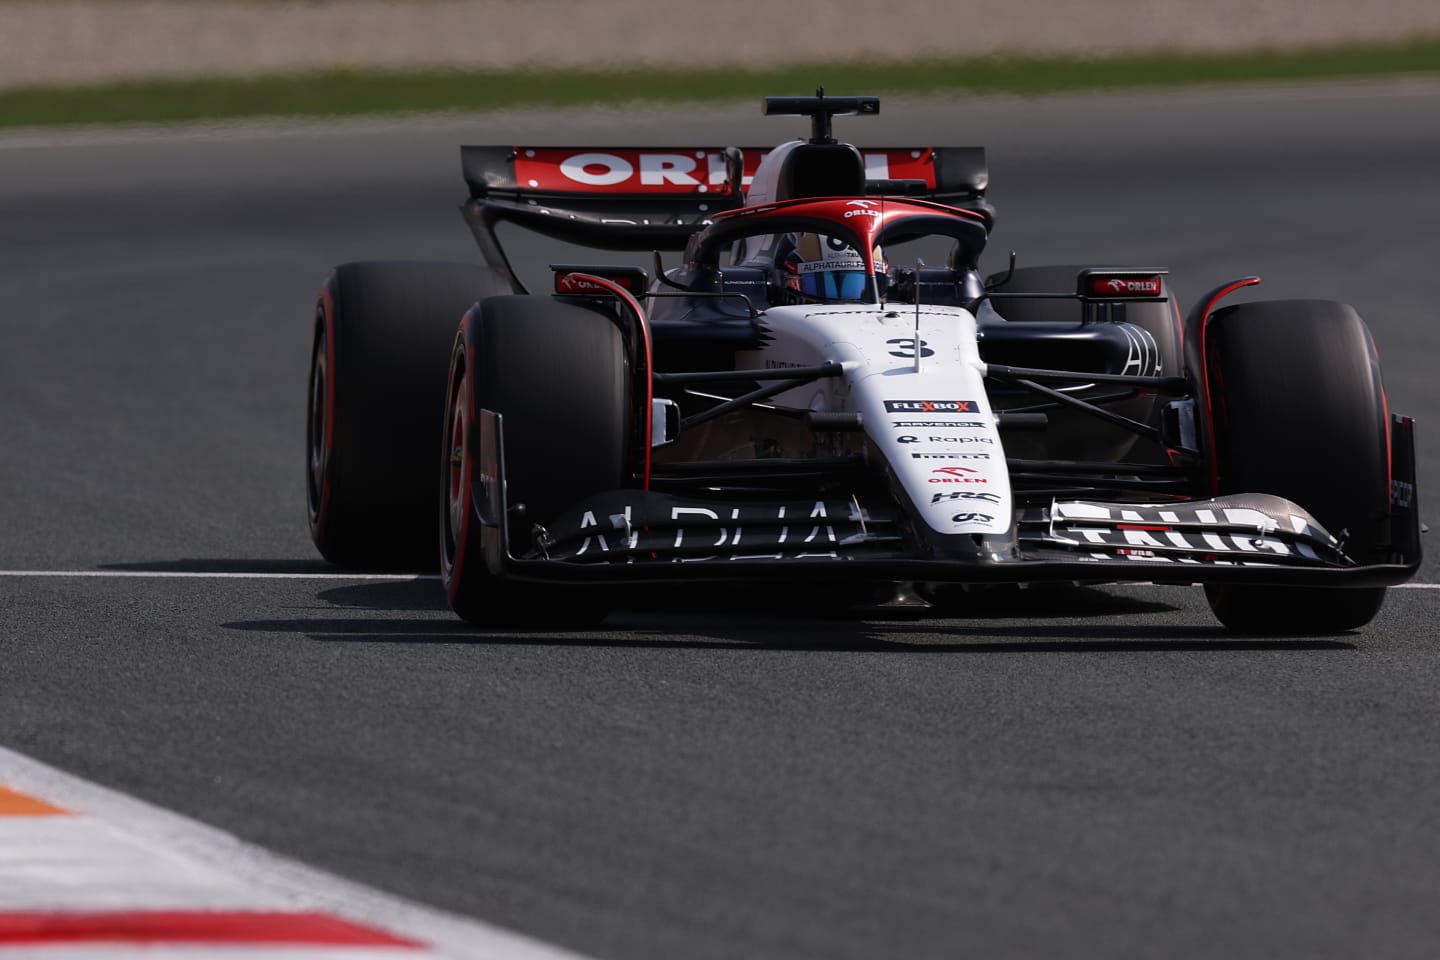 ZANDVOORT, NETHERLANDS - AUGUST 25: Daniel Ricciardo of Australia driving the (3) Scuderia